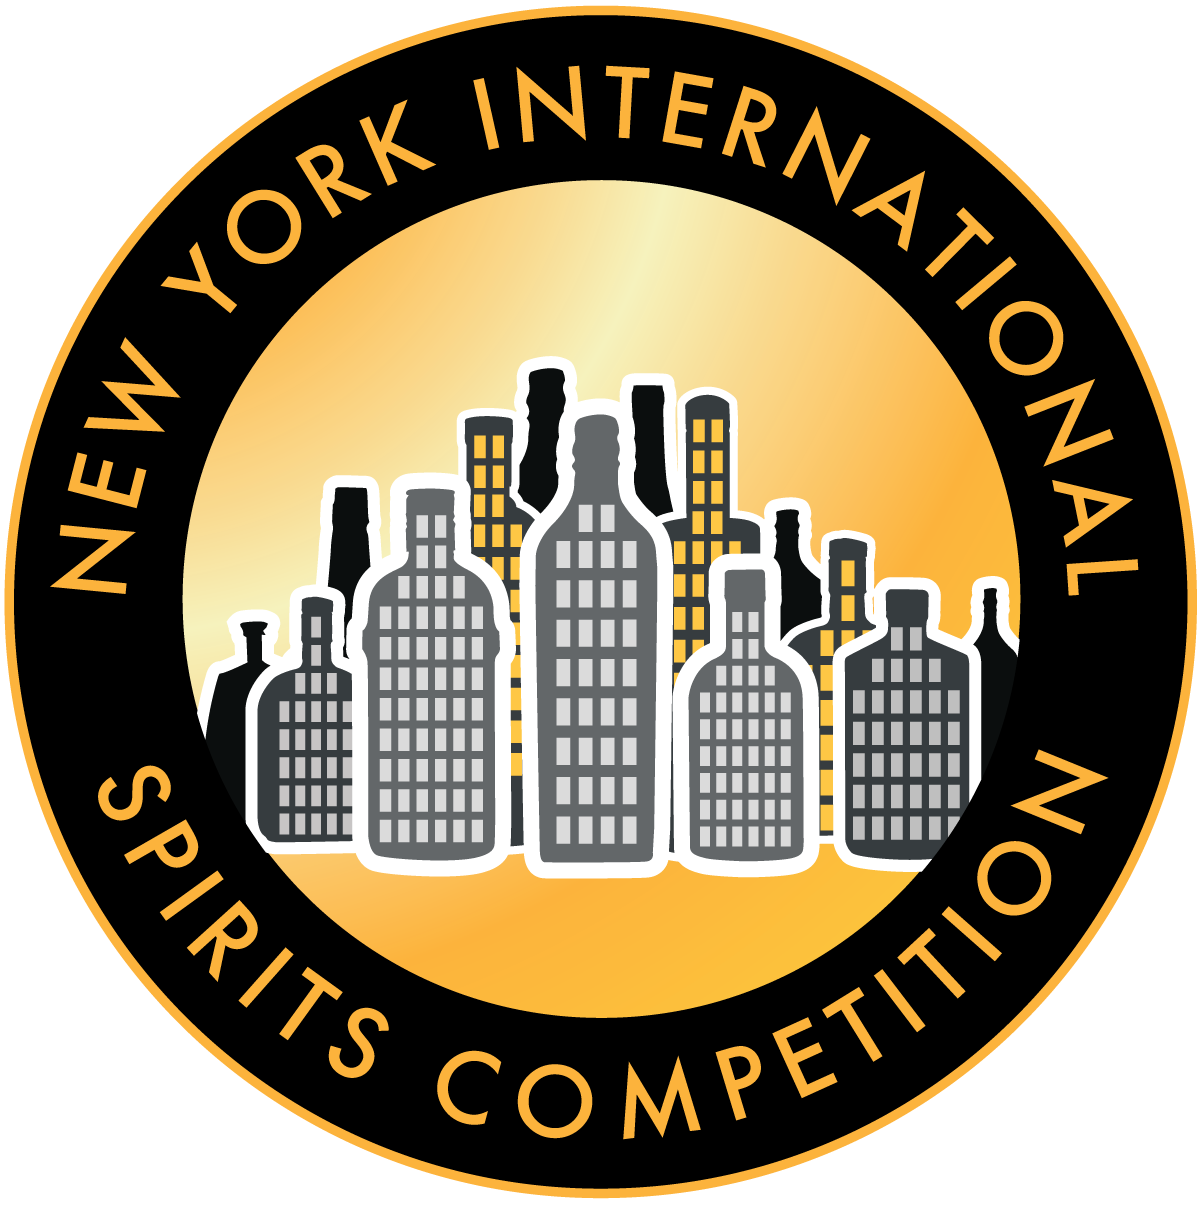 New York International Spirits Competition